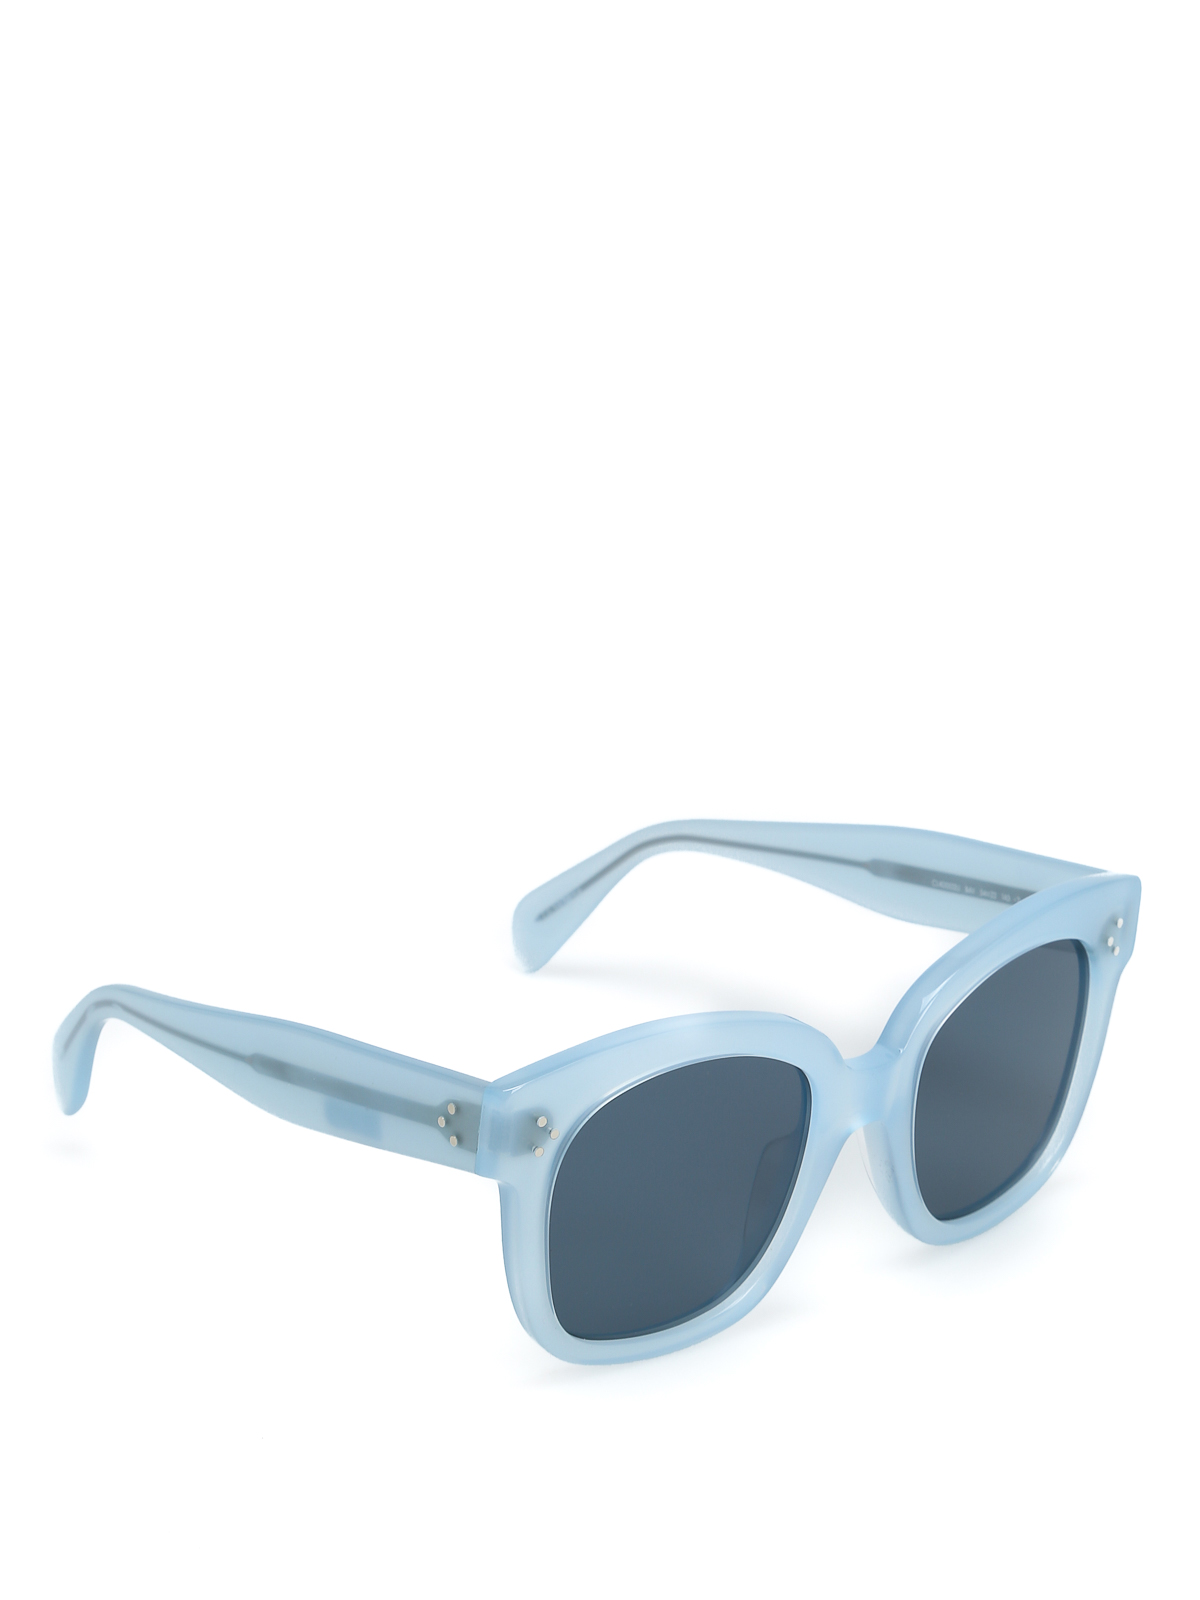 baby blue sunglasses